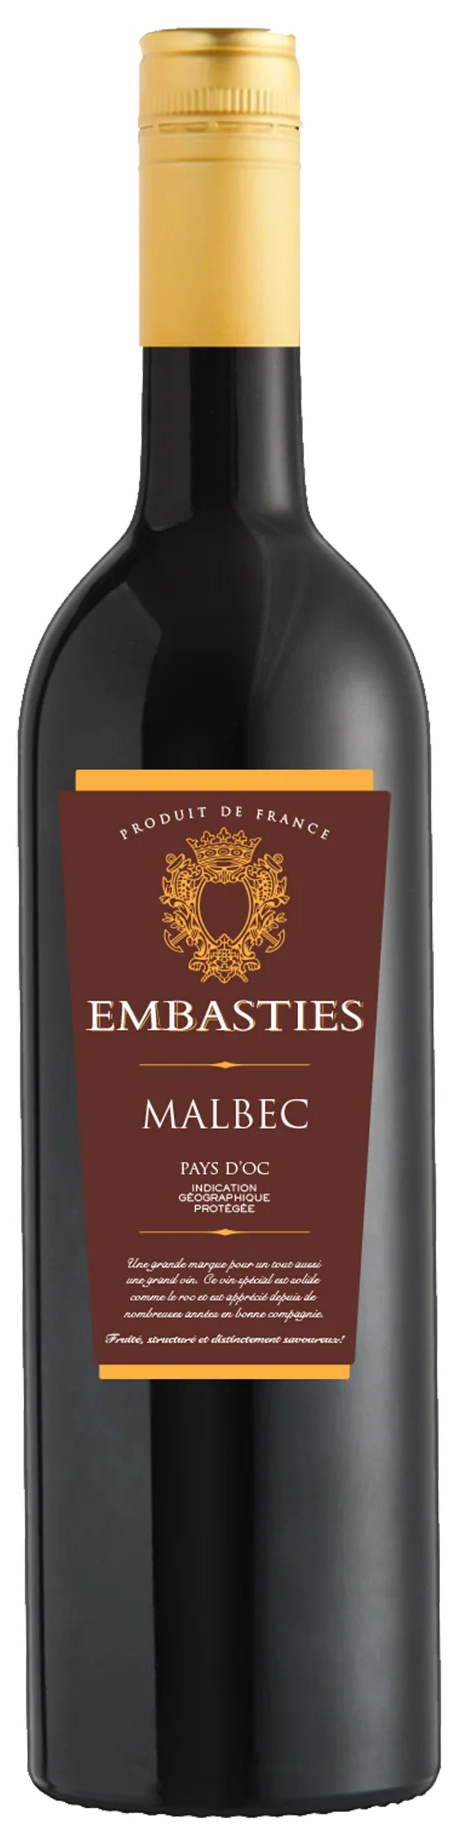 Embasties Malbec rode | IGP wijn Pays Faberwineworld Faberwineworld | - d\'Oc